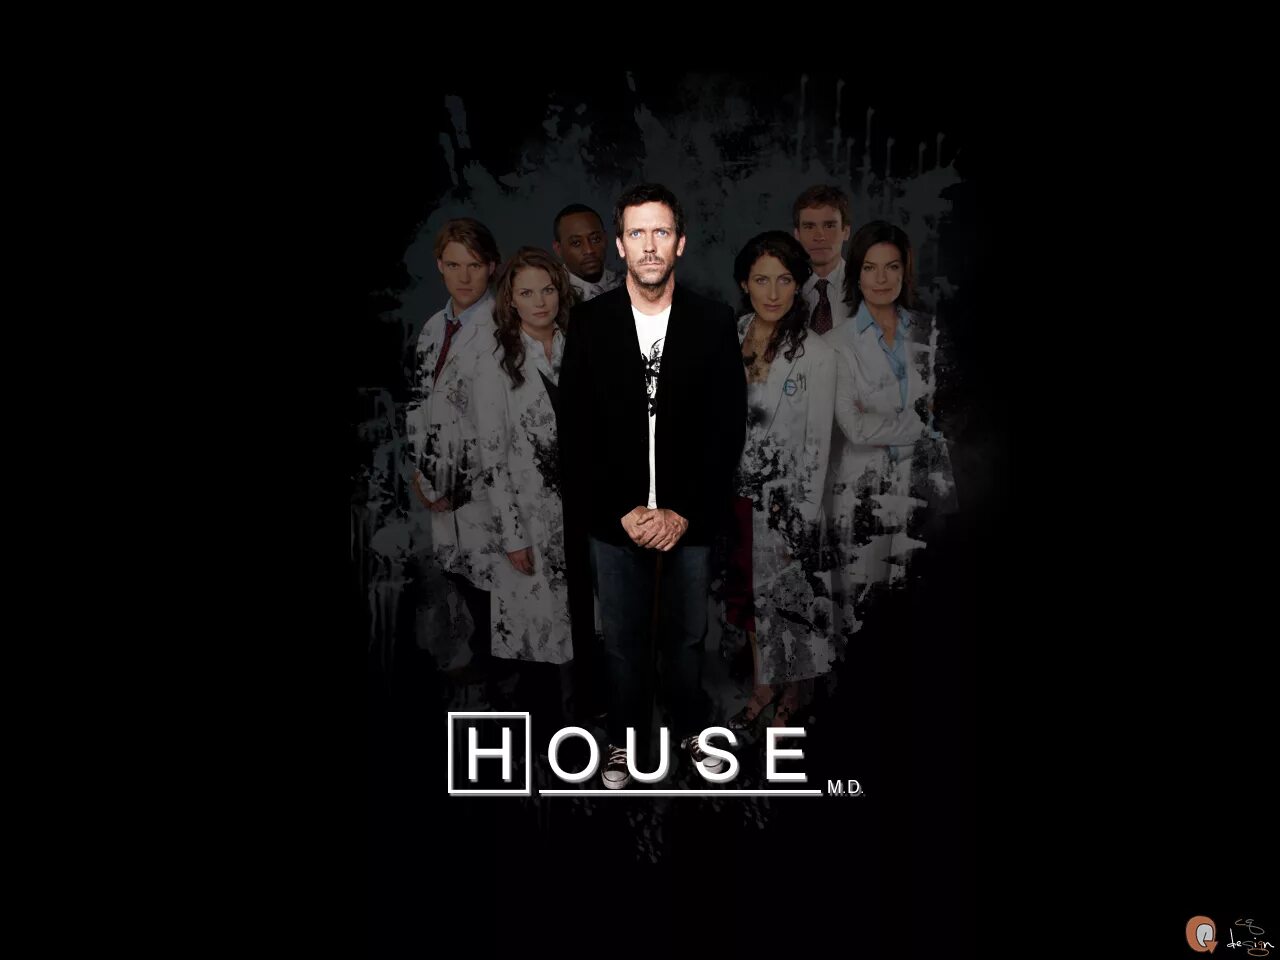 House soundtracks. Доктор Хаус. House MD заставка. Доктор Хаус обои. Доктор Хаус обои на телефон.